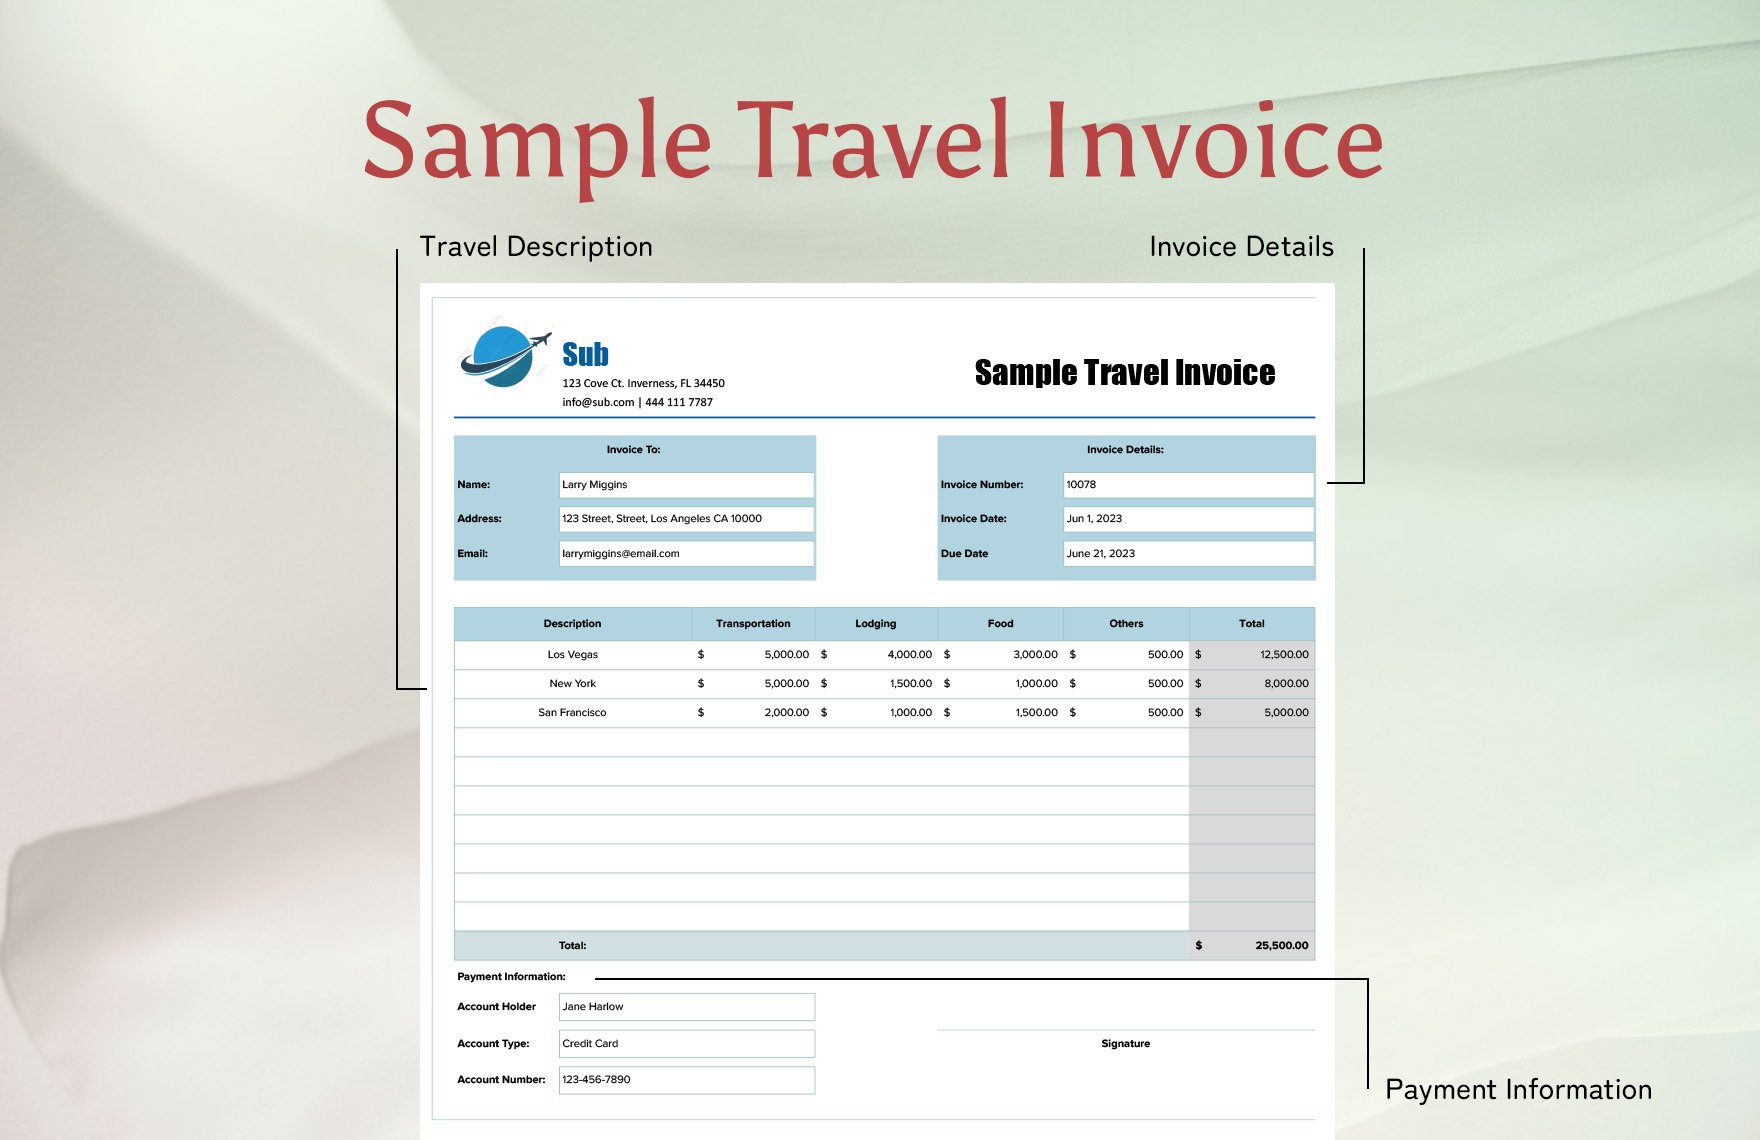 Sample Travel Invoice Template